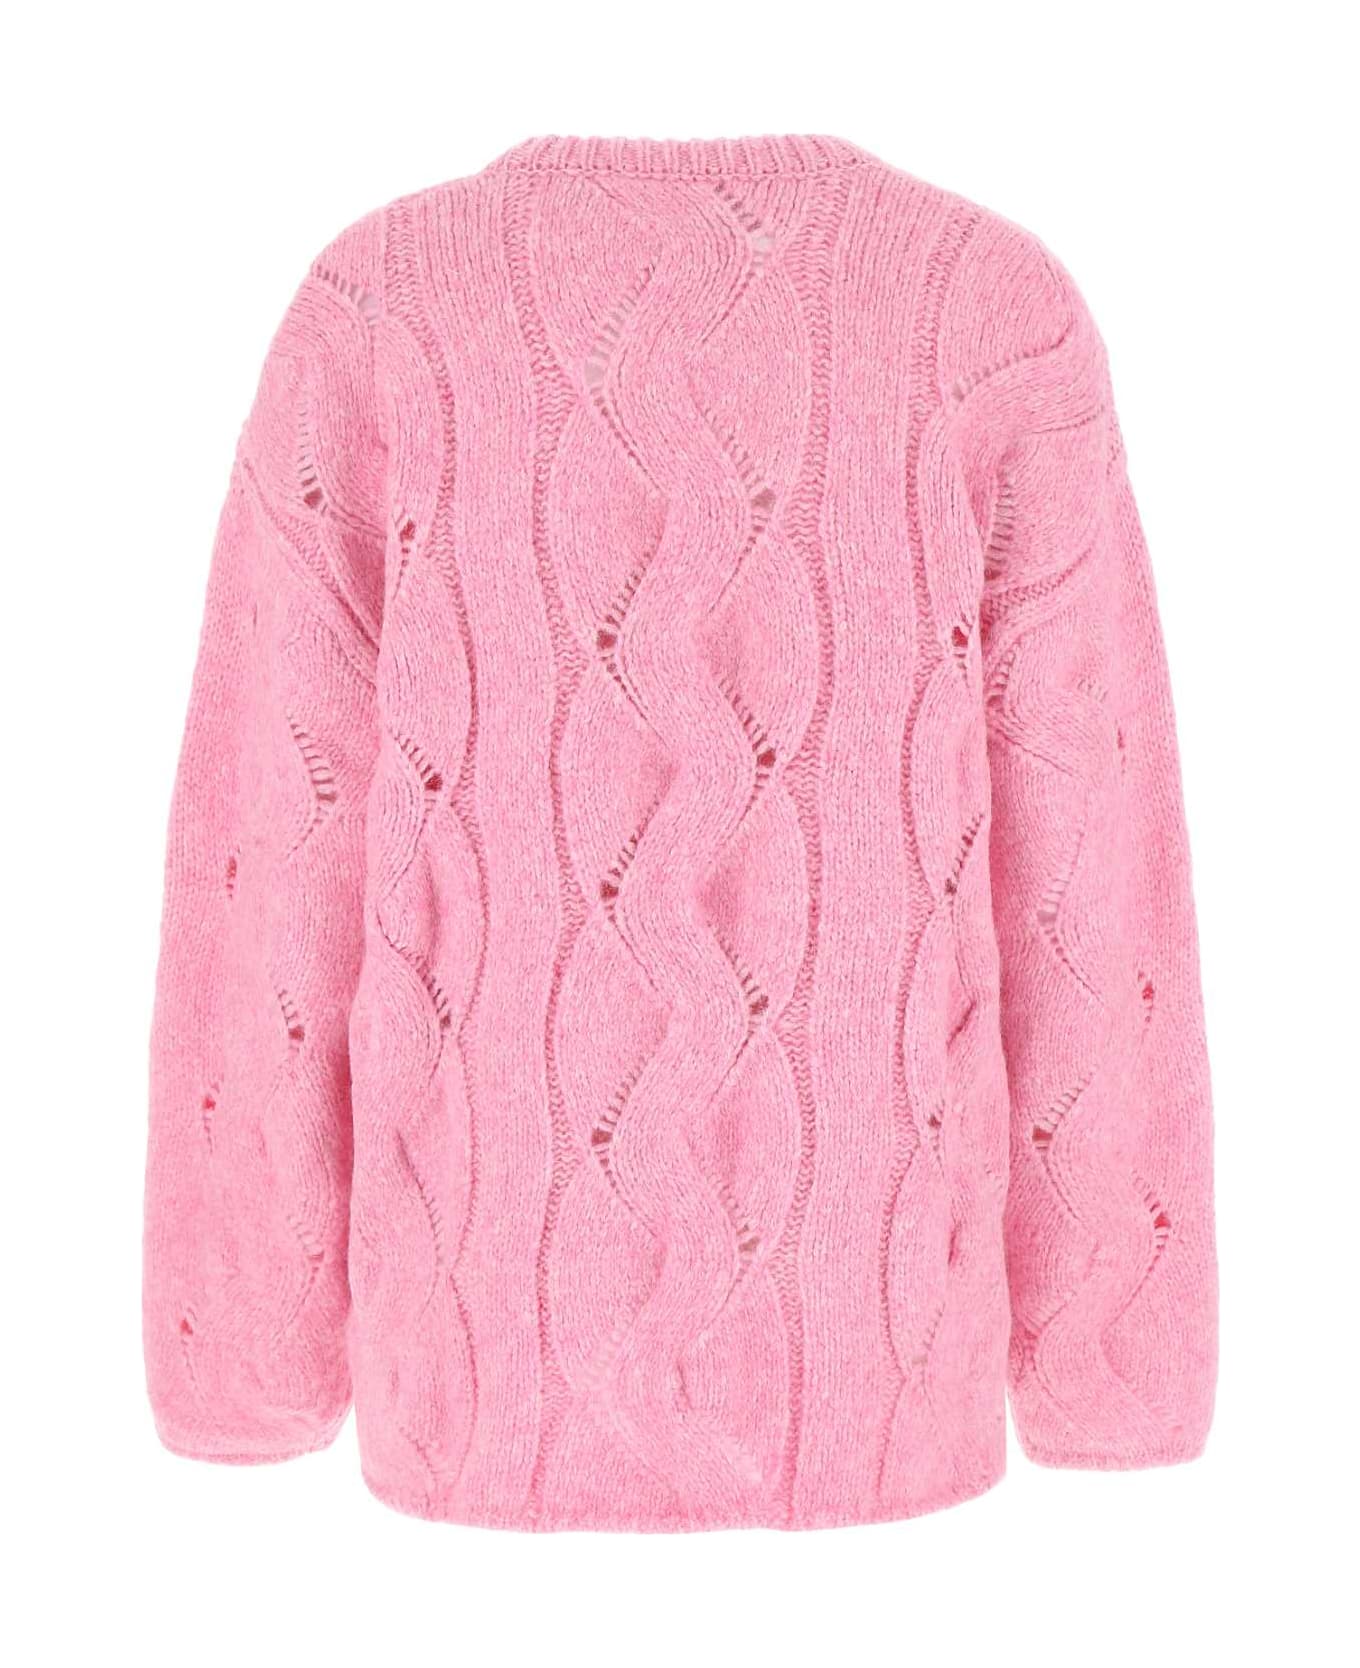 Low Classic Pink Alpaca Blend Oversize Sweater - 0227